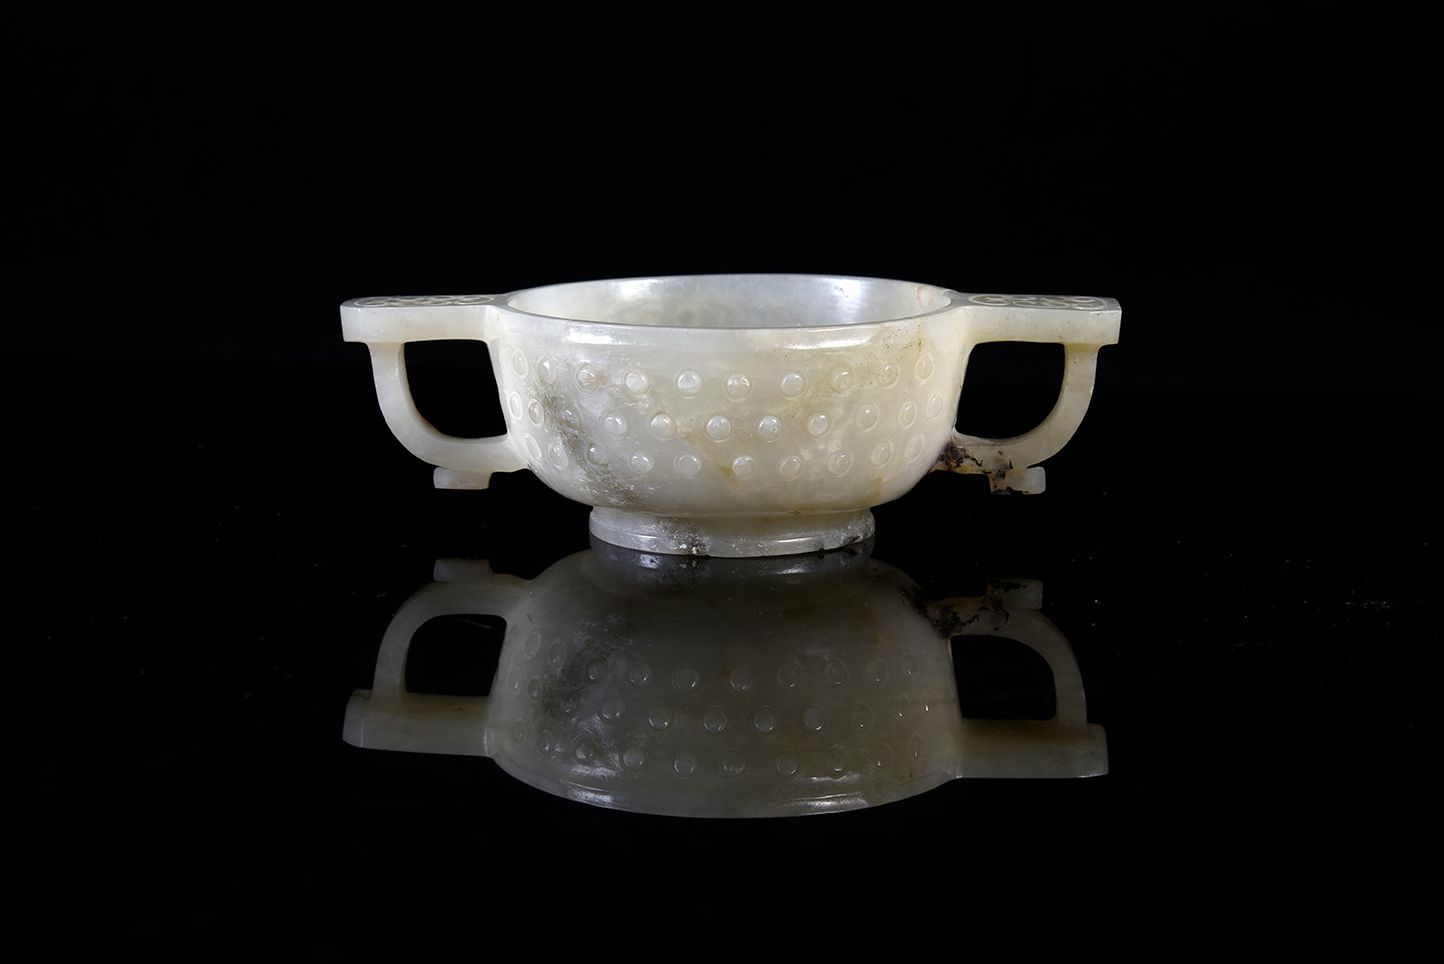 Null 青花瓷玉碗，有两个雕刻的把手，碗身有钉子的图案。
清朝，19世纪。
高：3.2厘米，长：10.6厘米